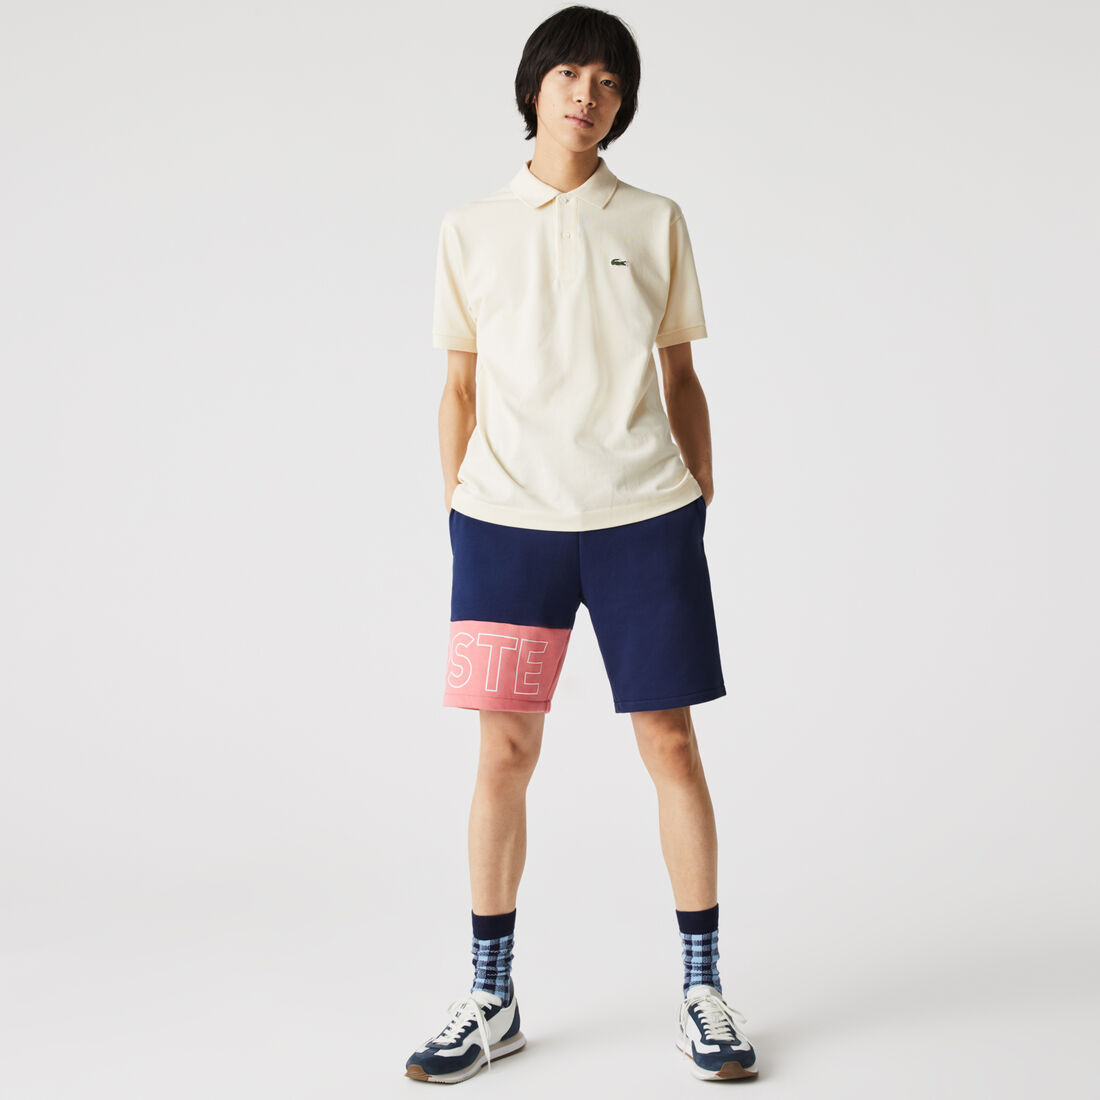 Men's Lettered Colorblock Fleece Shorts